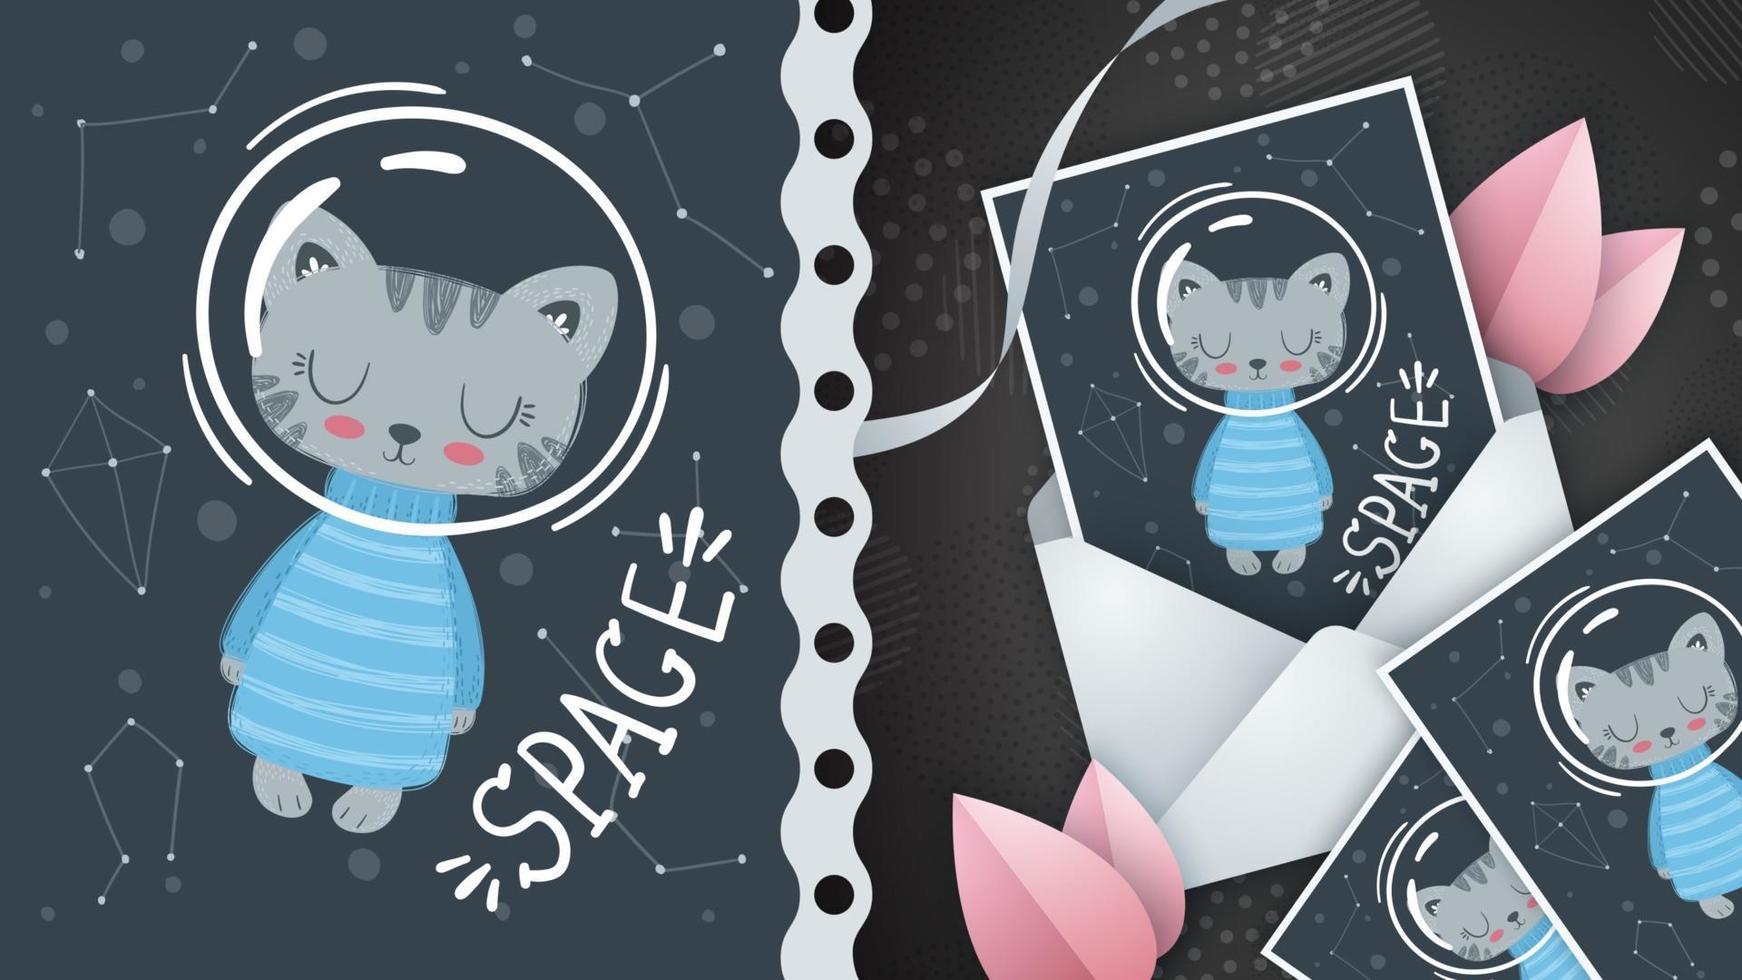 idea de gato espacial para tarjeta de felicitación vector